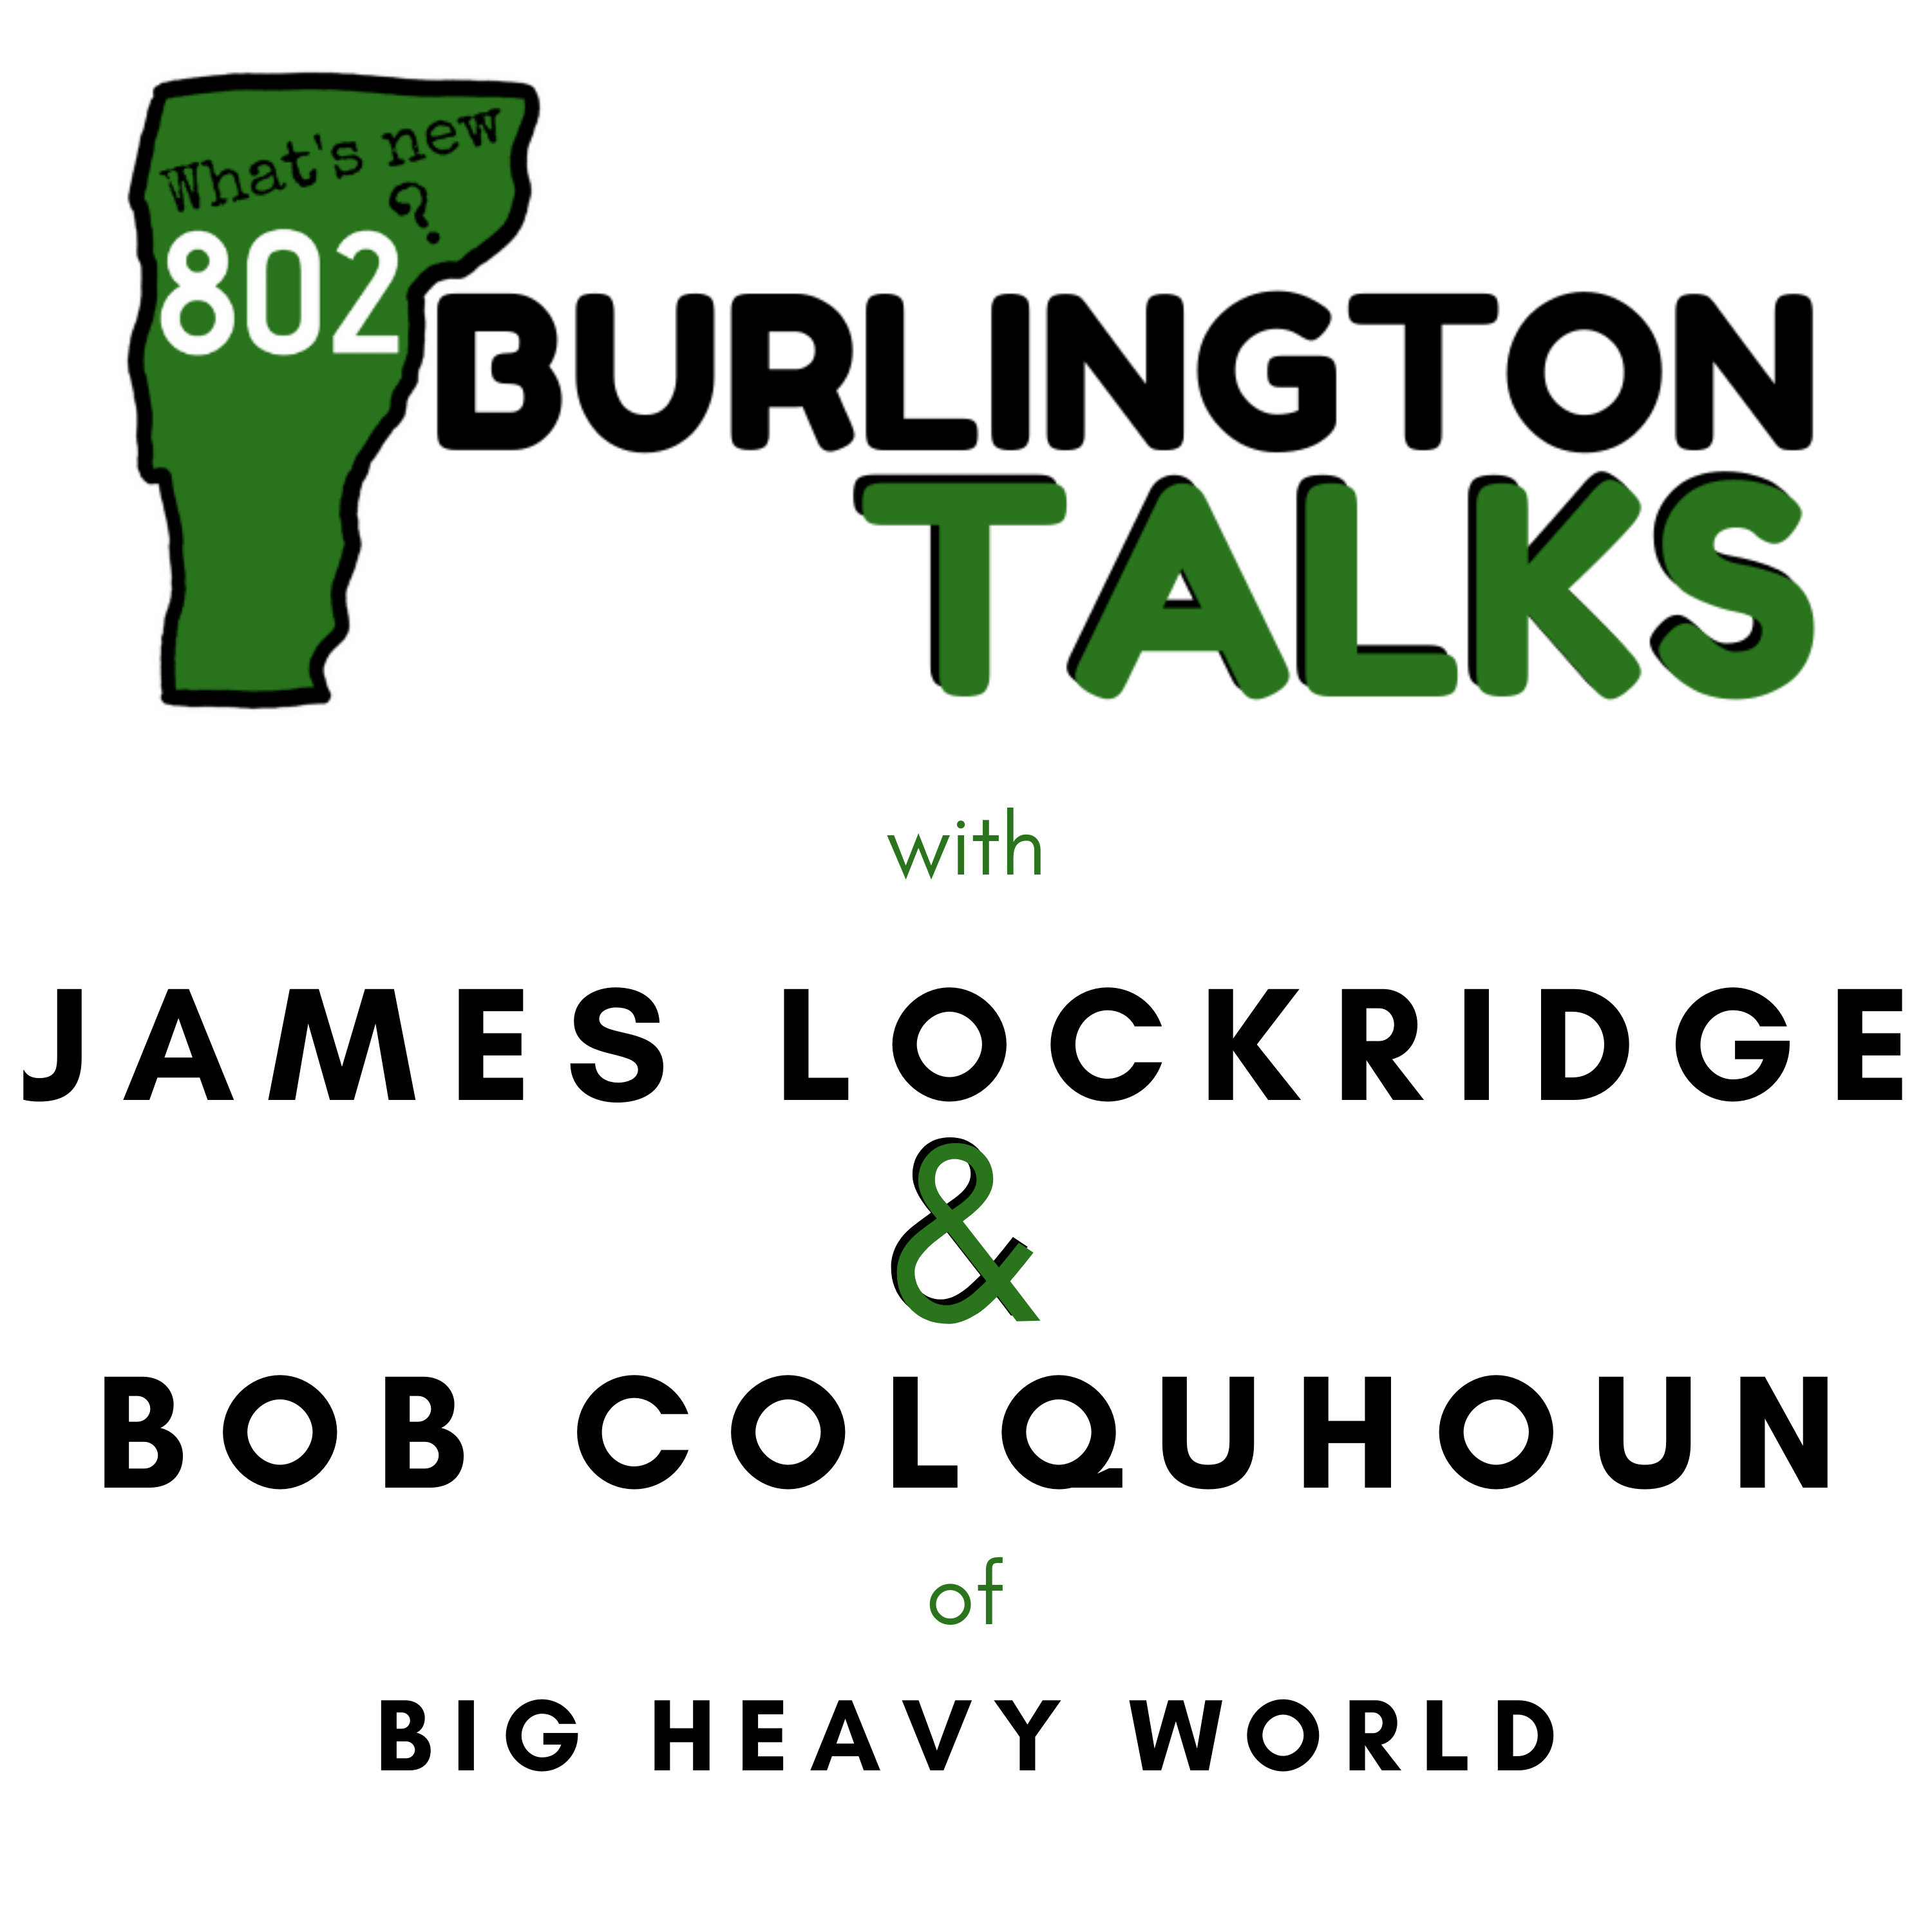 Jiving with James Lockridge and Bob Colquhoun at BIG HEAVY WORLD